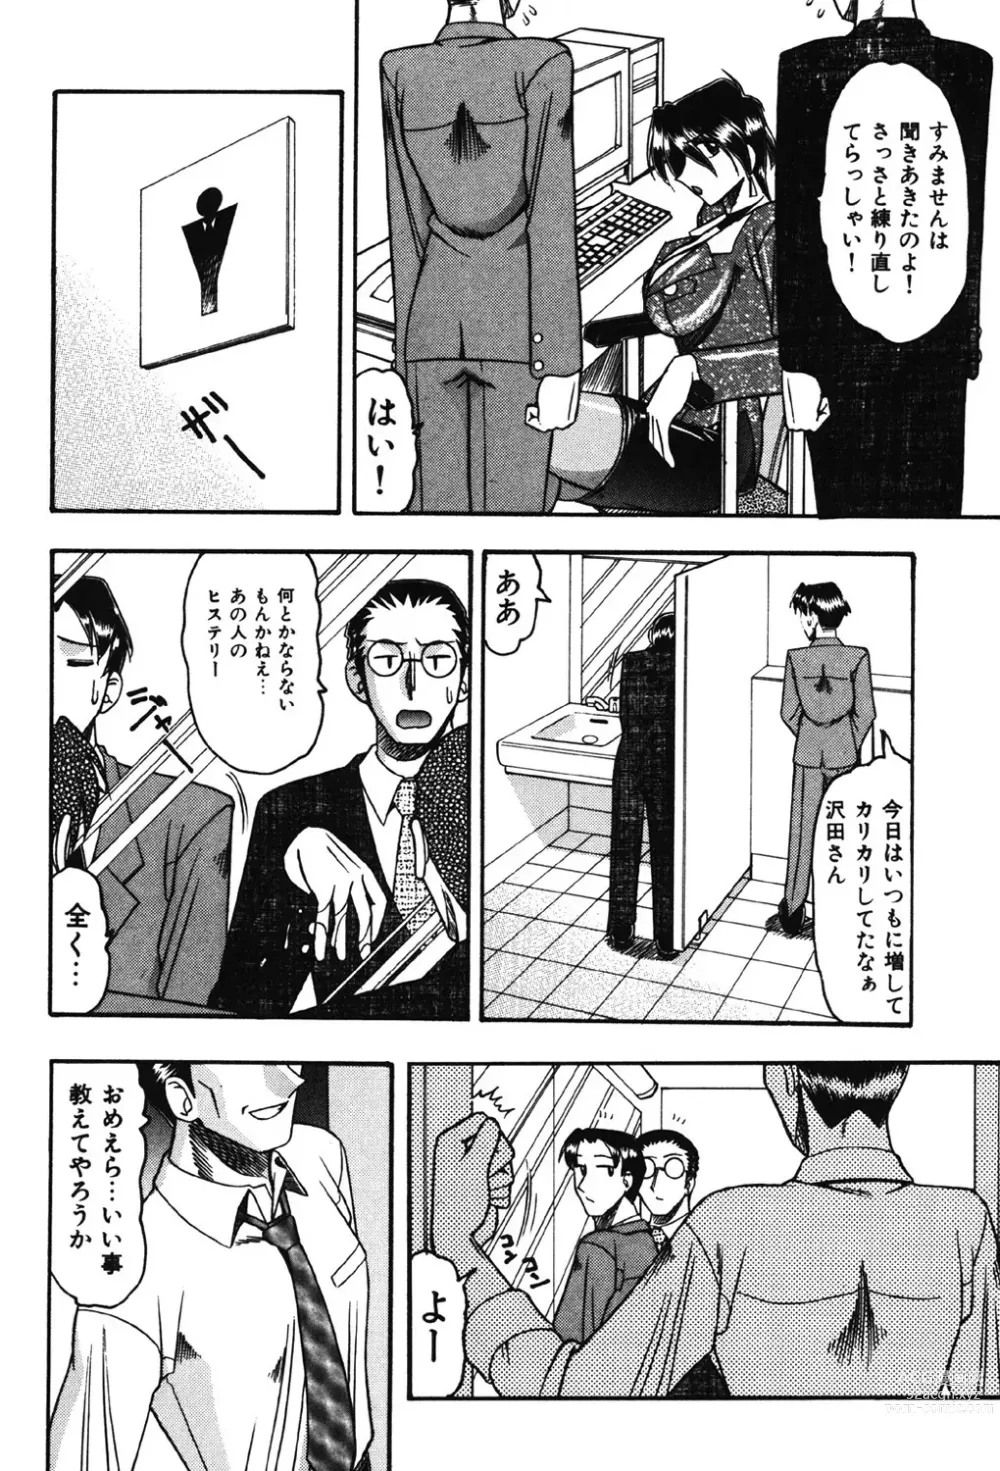 Page 9 of manga Hahaoya Ga Onna Ni Naru Toki